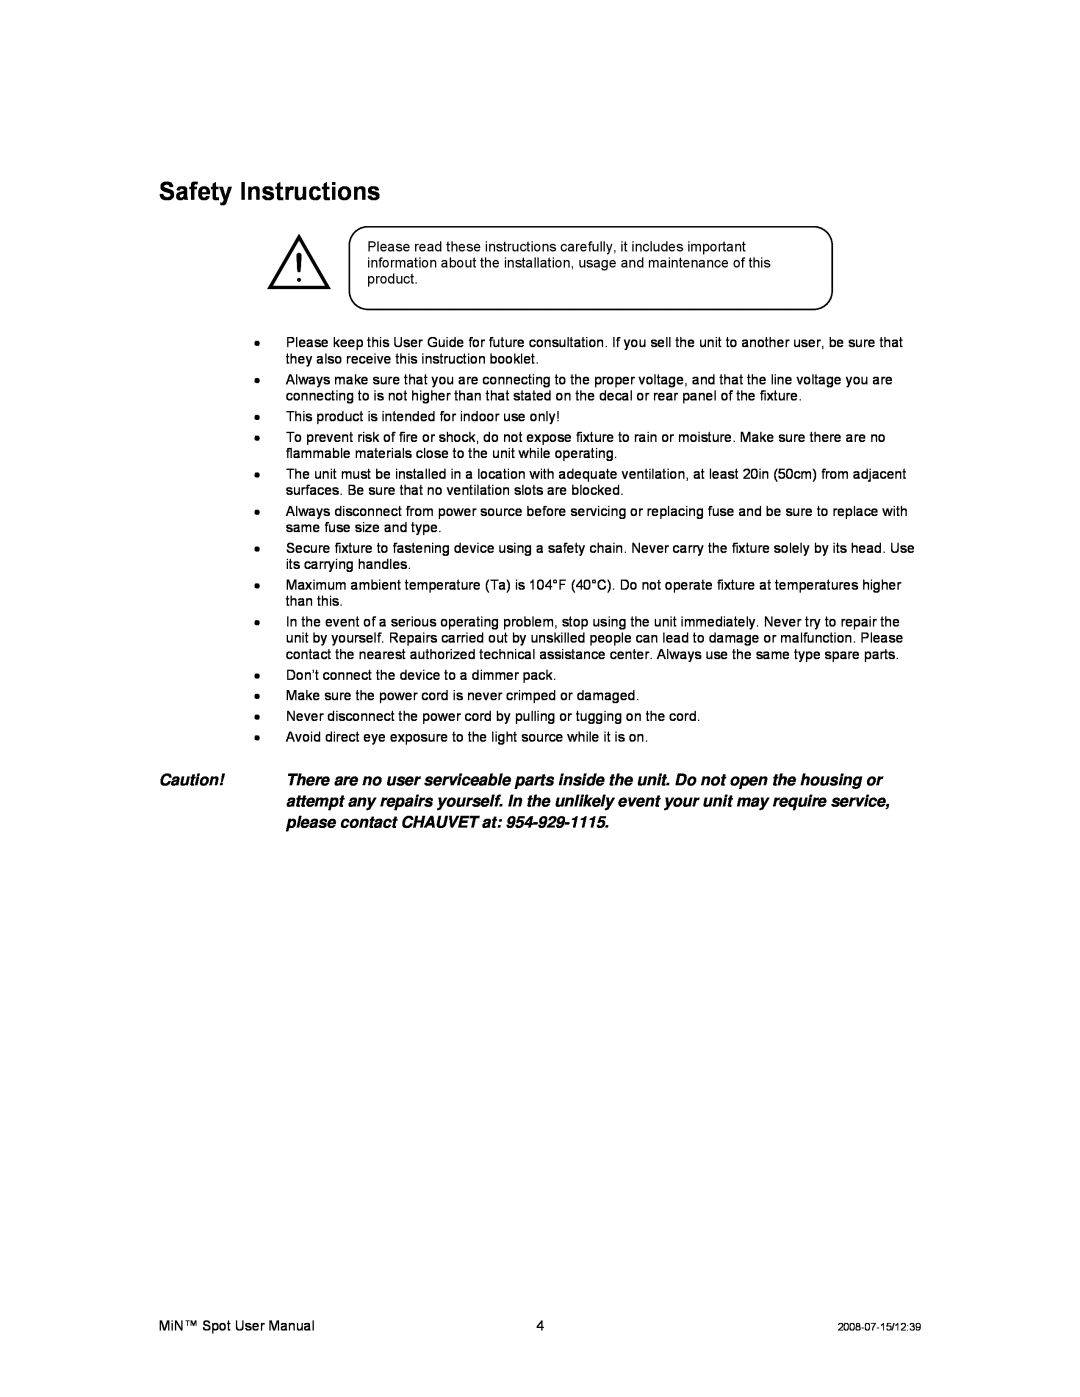 Chauvet DMX512 user service Safety Instructions 